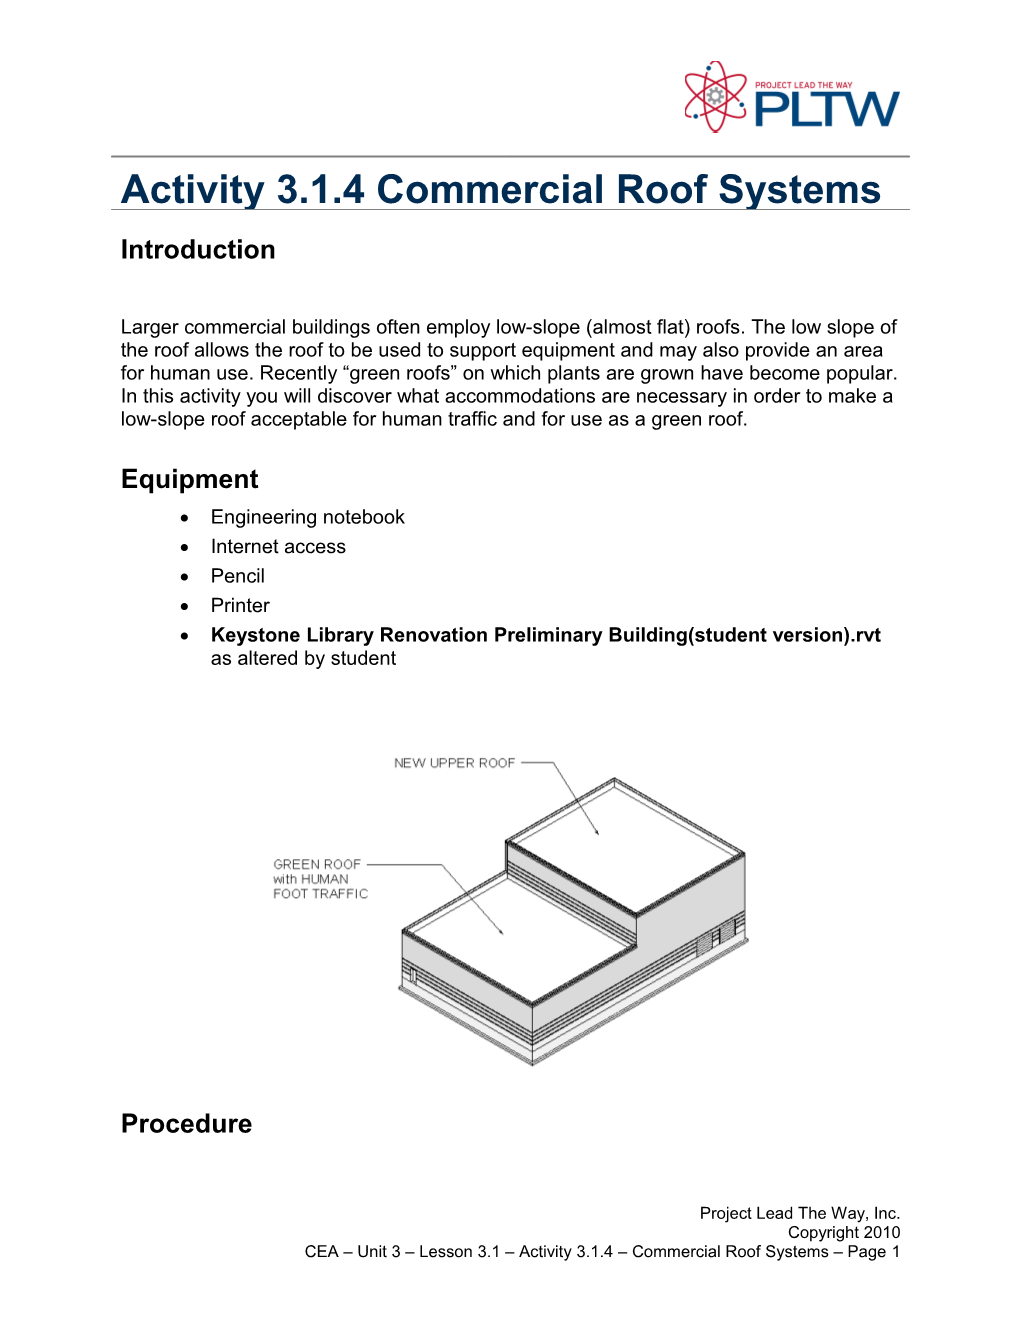 Activity 3.1.4 Floor Systems